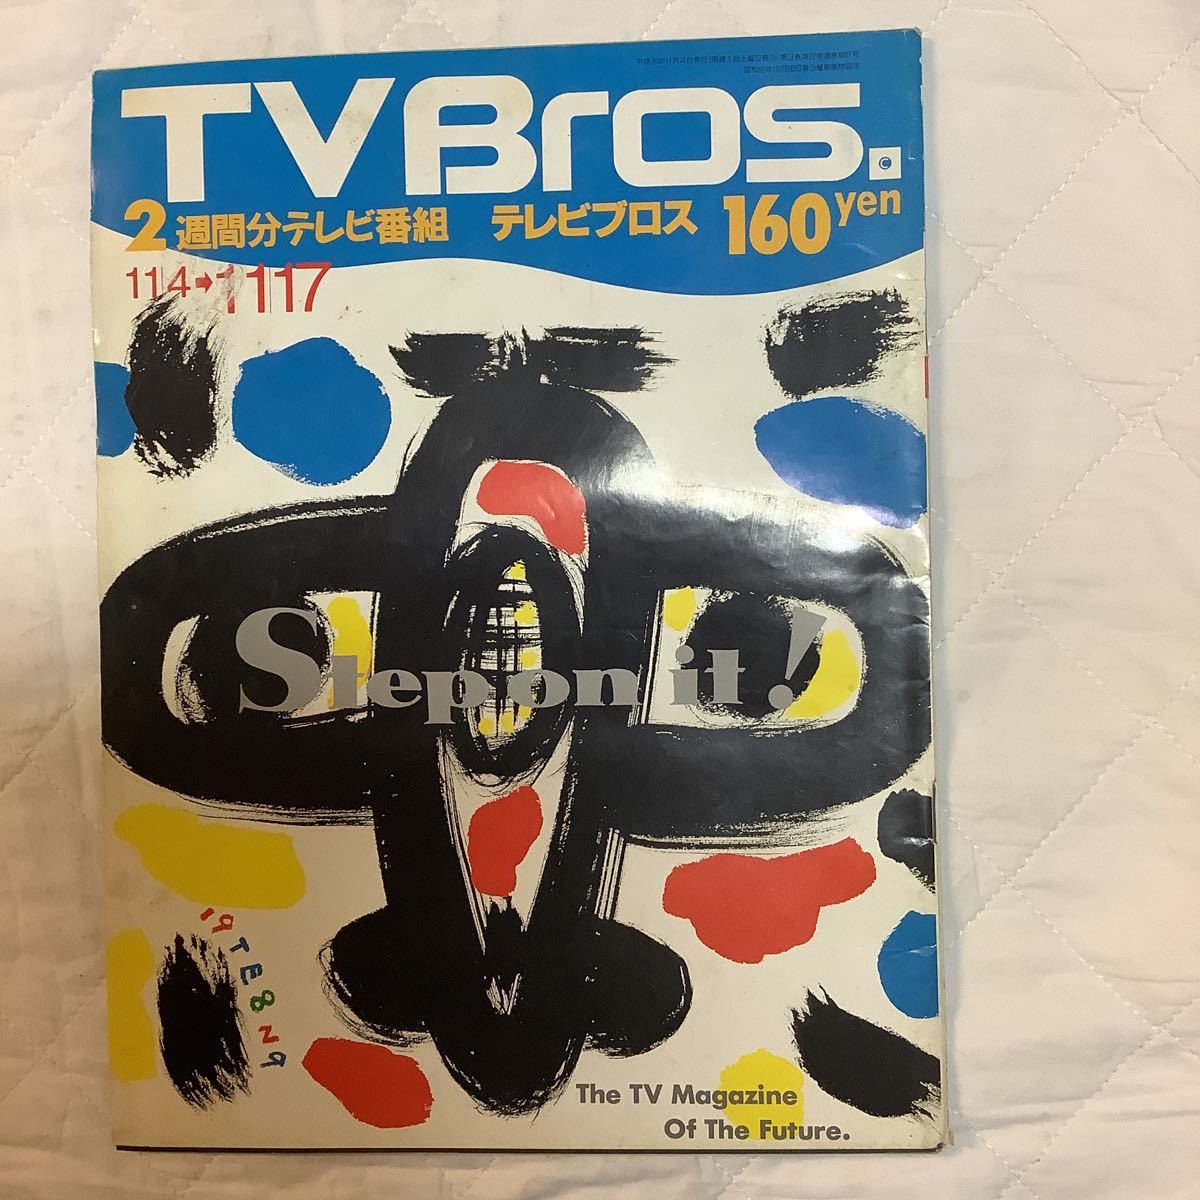 【 TV Bros テレビブロス】1989年22号 11/4-11/17 うた番組特集/ ナンシー関 / 遠藤賢司_画像1